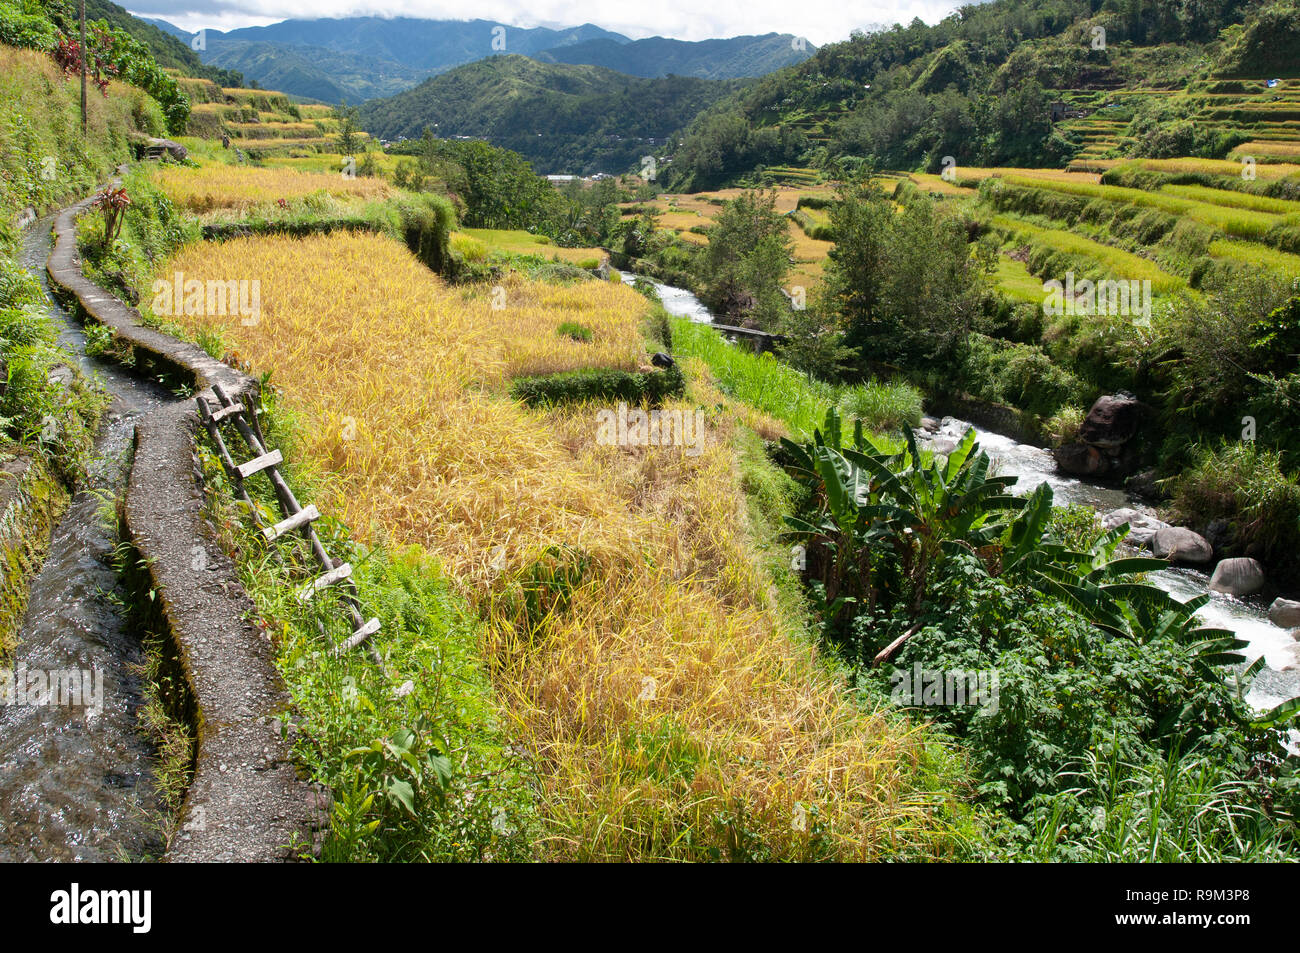 Hapao Rice Terraces, Hungduan, Province d'Ifugao, Cordillera, Luzon, Philippines, Asie, Asie du Sud, UNESCO World Heritage Banque D'Images